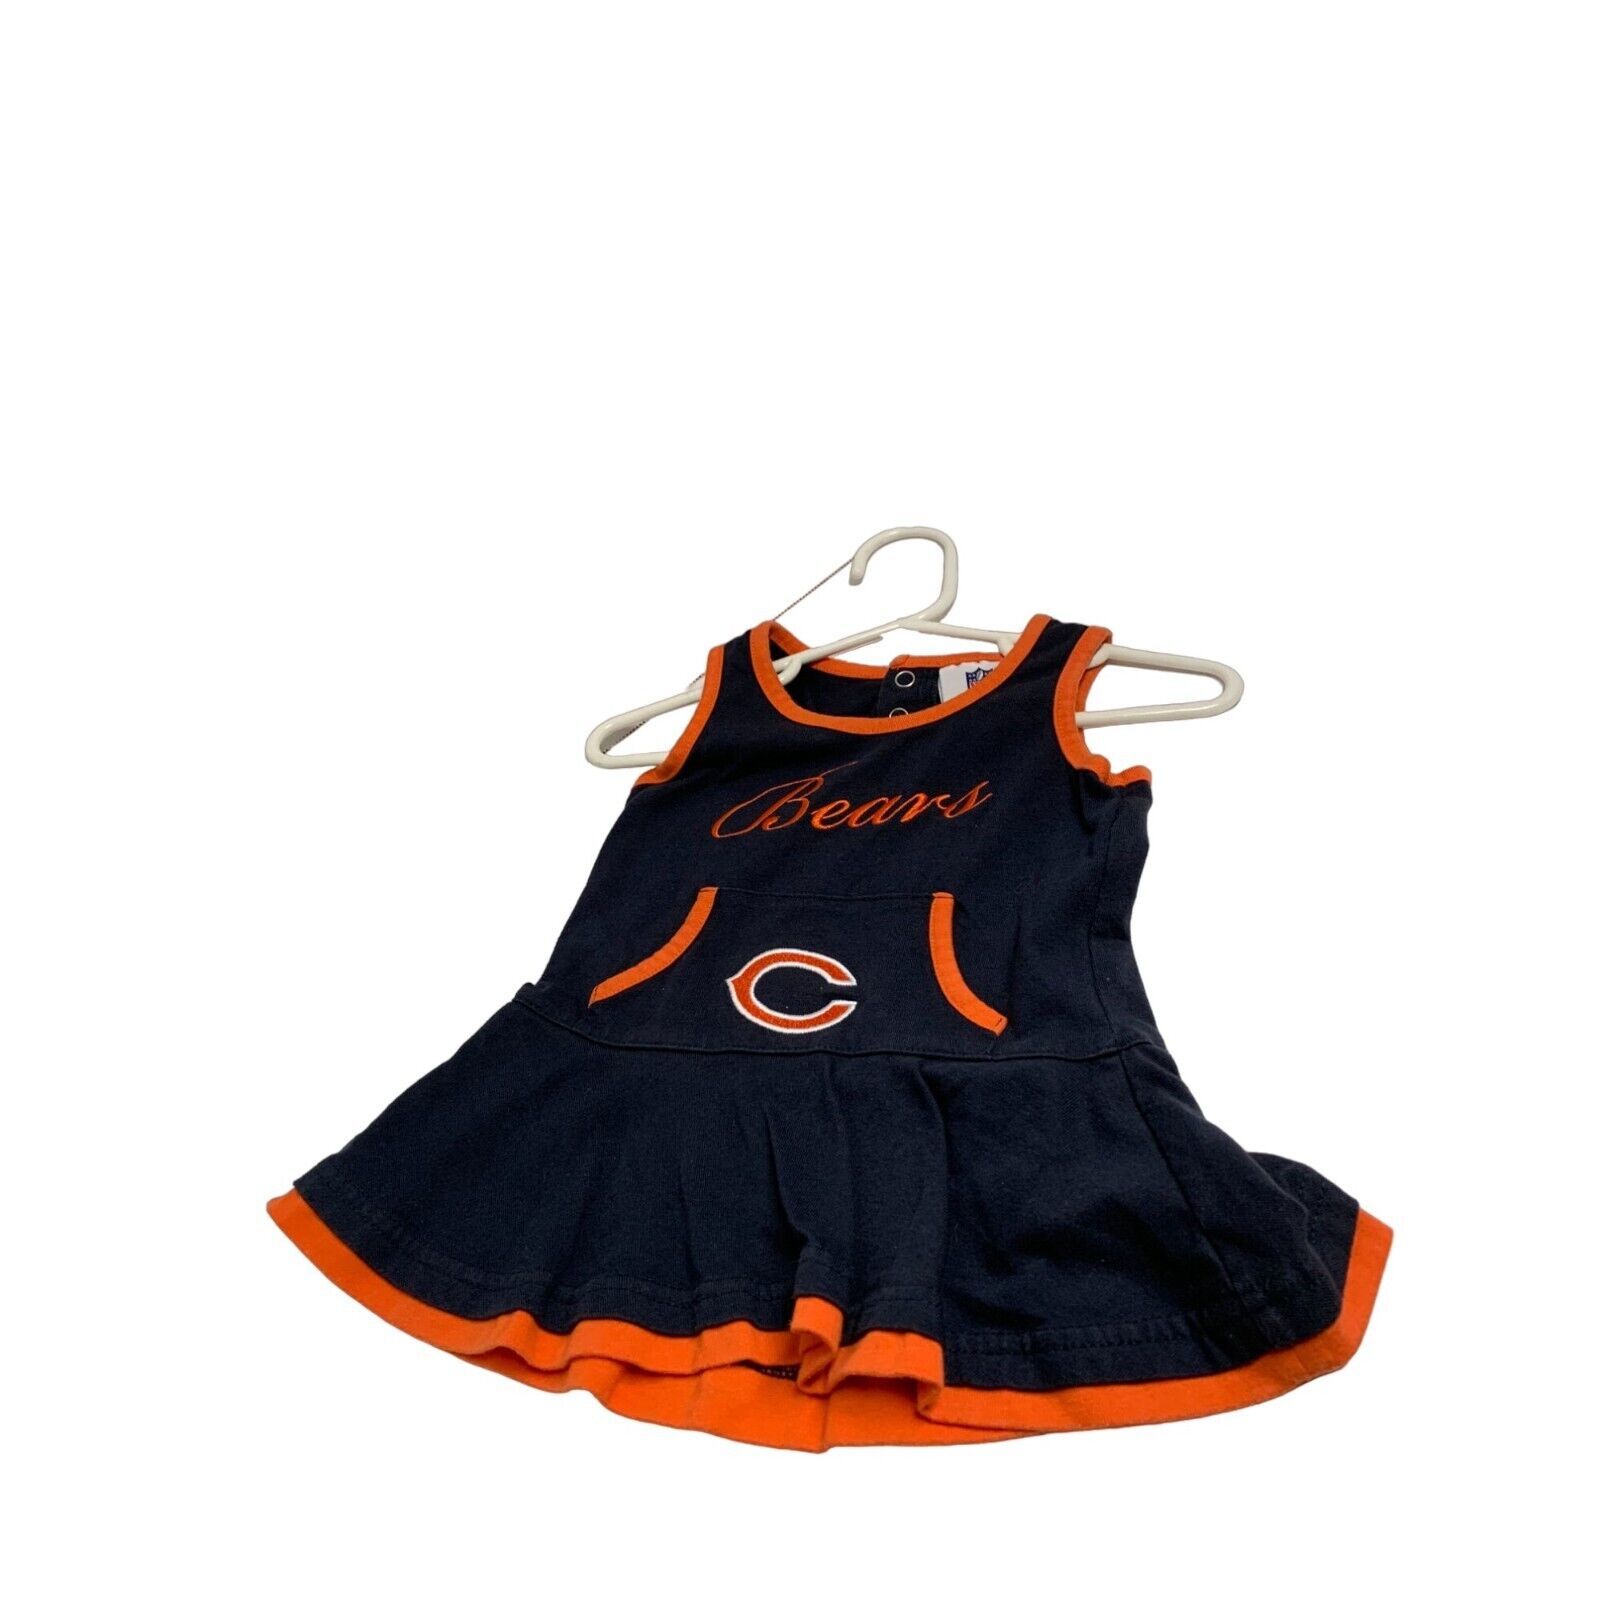 Primary image for NFL Kids Toddler Infant Girls Baby Size 6 9 Months Sleeveless Cheerleader Dress